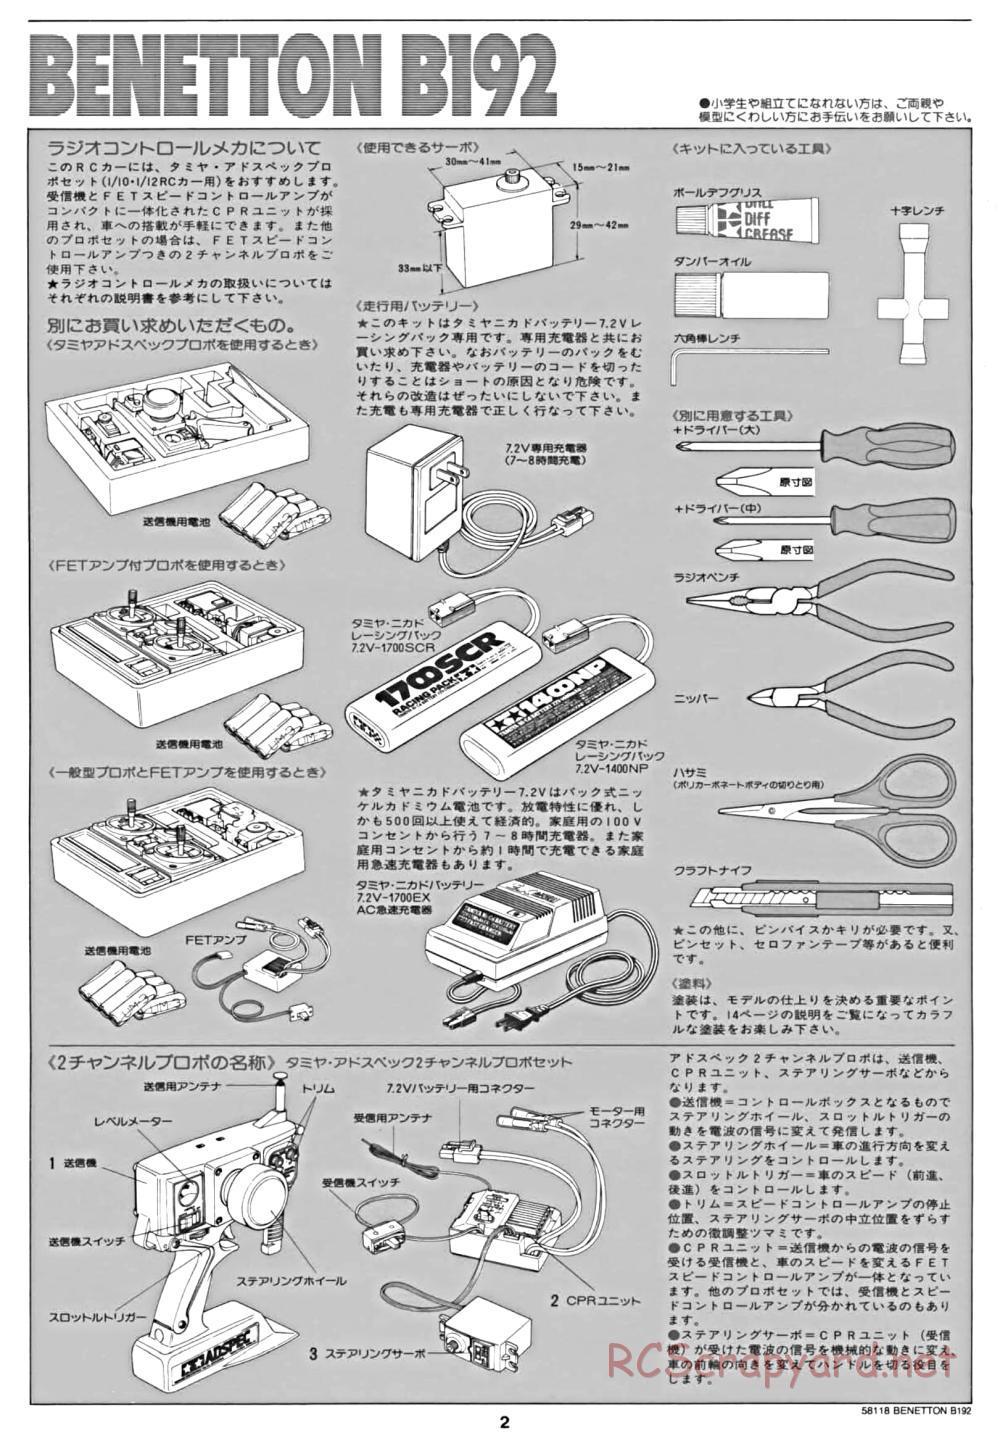 Tamiya - Benetton B192 - F102 Chassis - Manual - Page 2